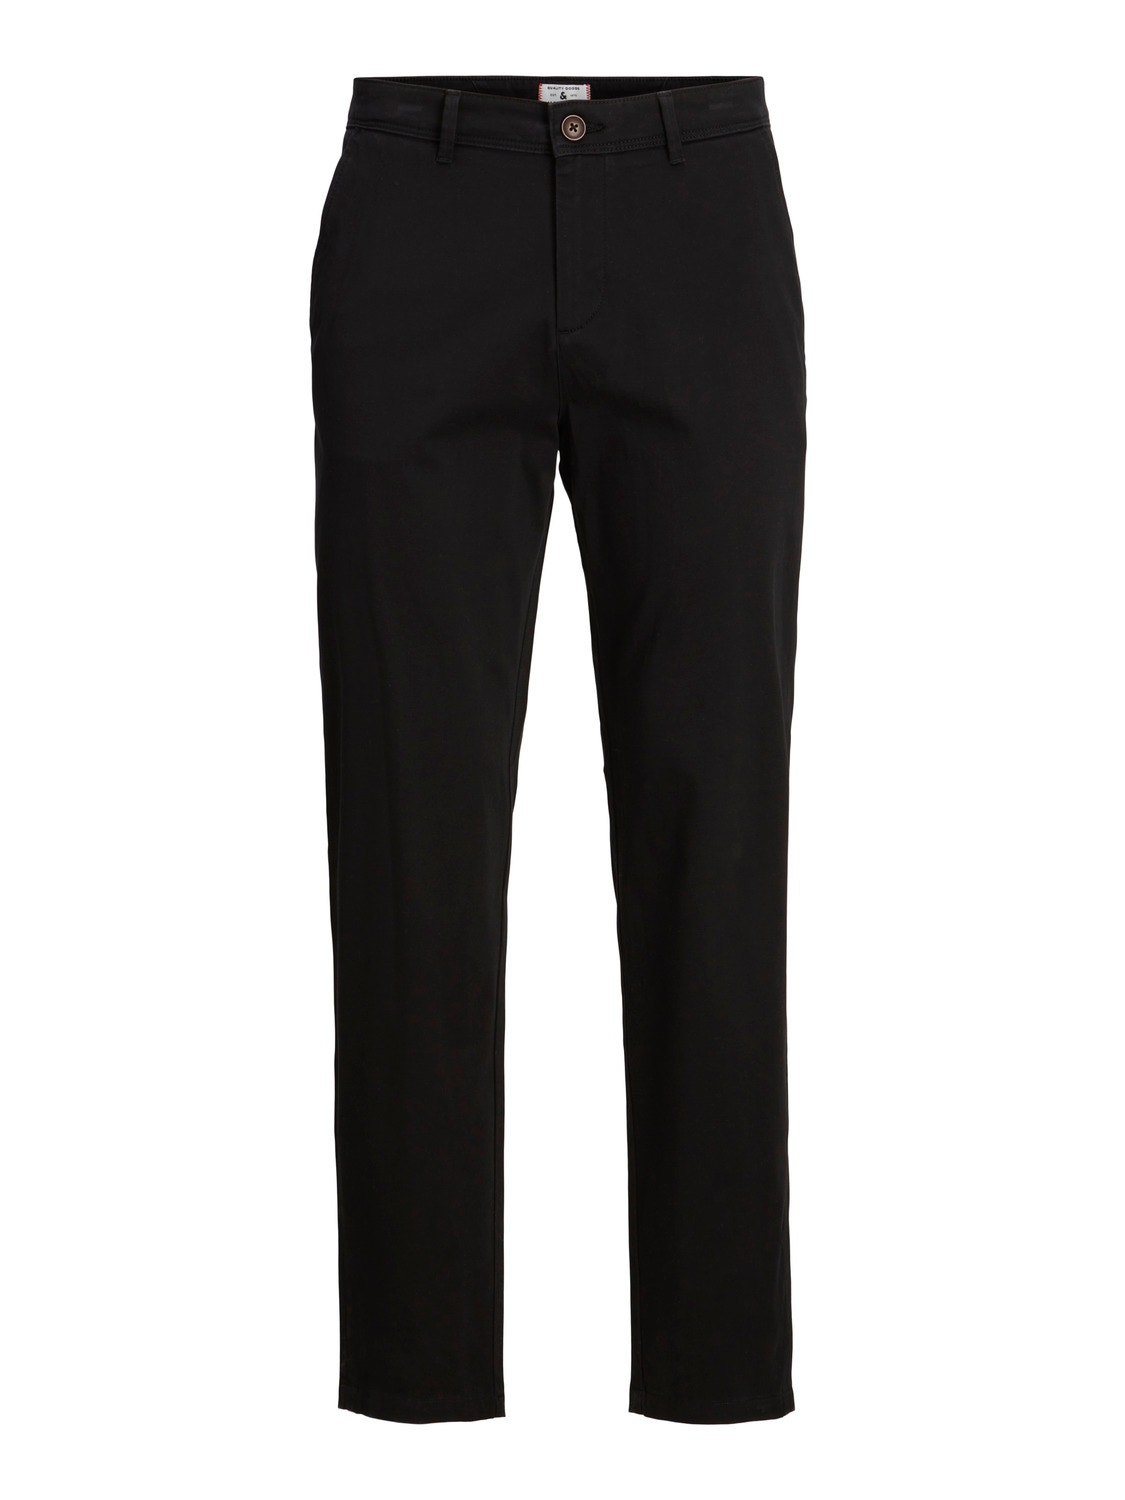 Jack & Jones Loose Fit Chino trousers -Black - 12218622